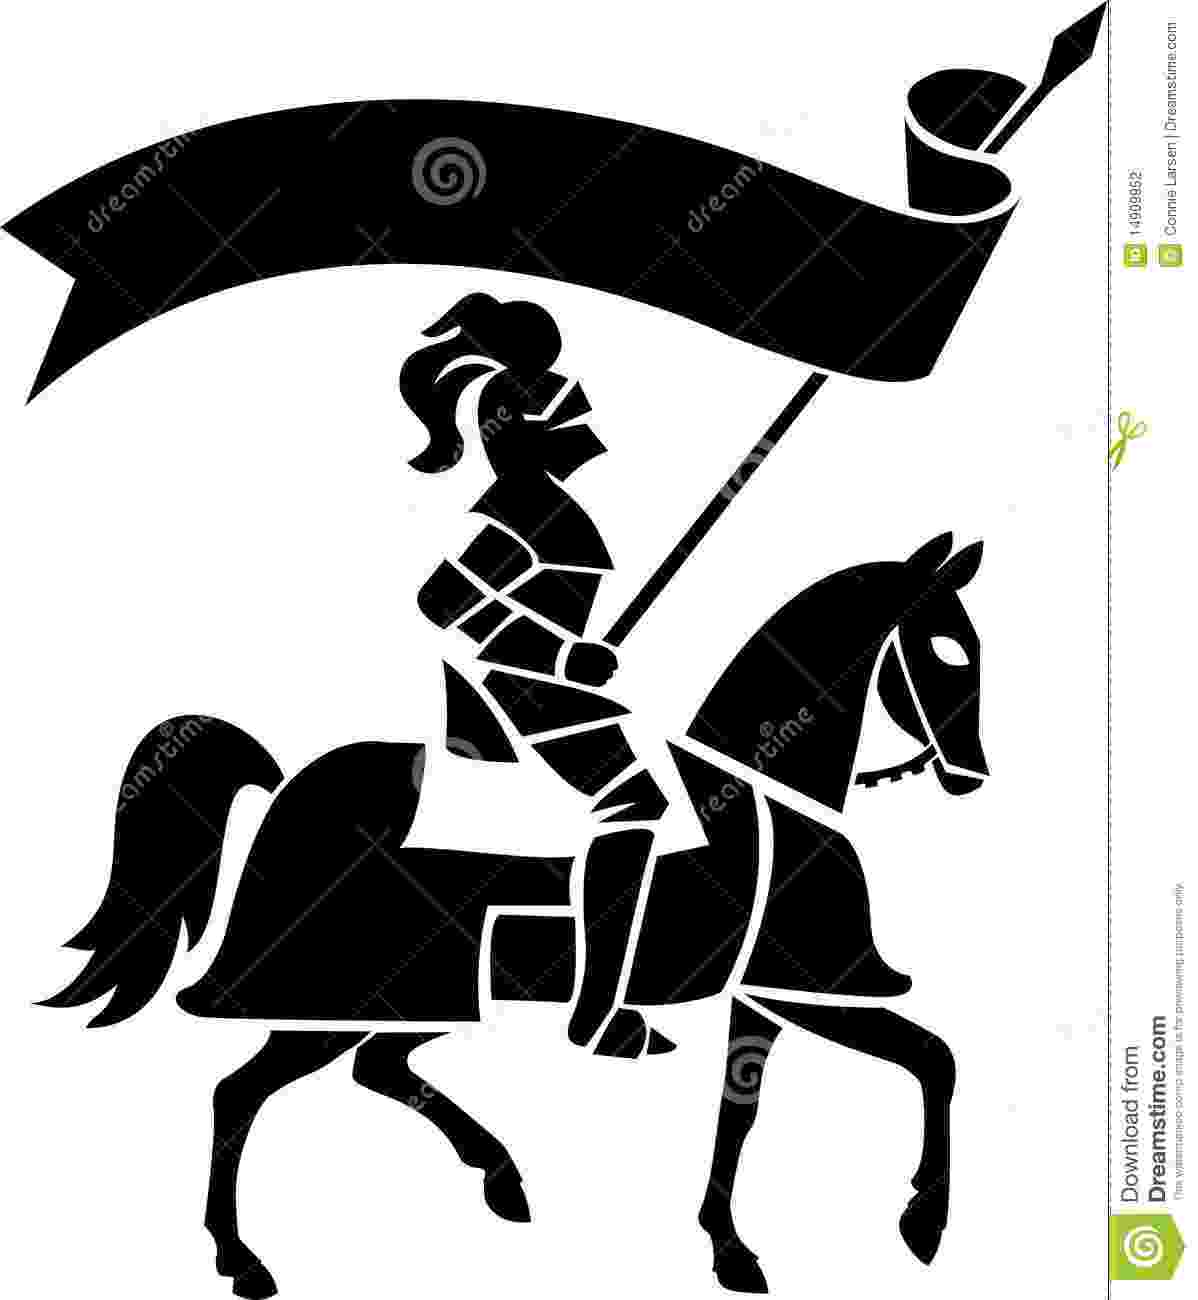 knight on horseback knight on horse with bannerai stock vector illustration knight horseback on 